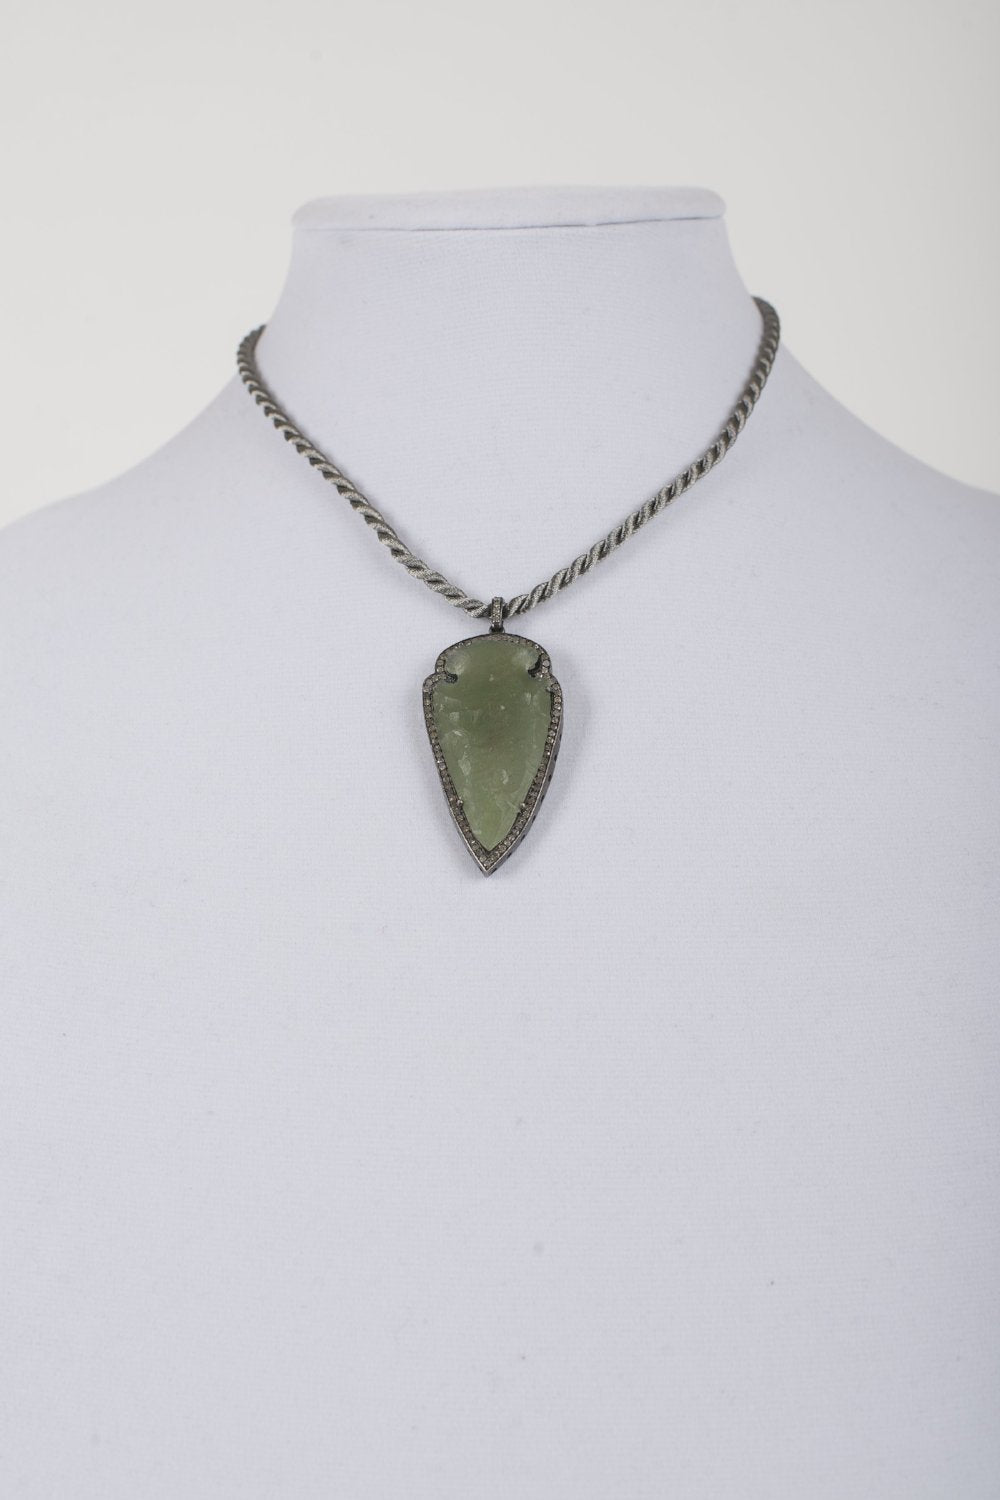 Agate and Pave Diamond Pendant on Silk Cord